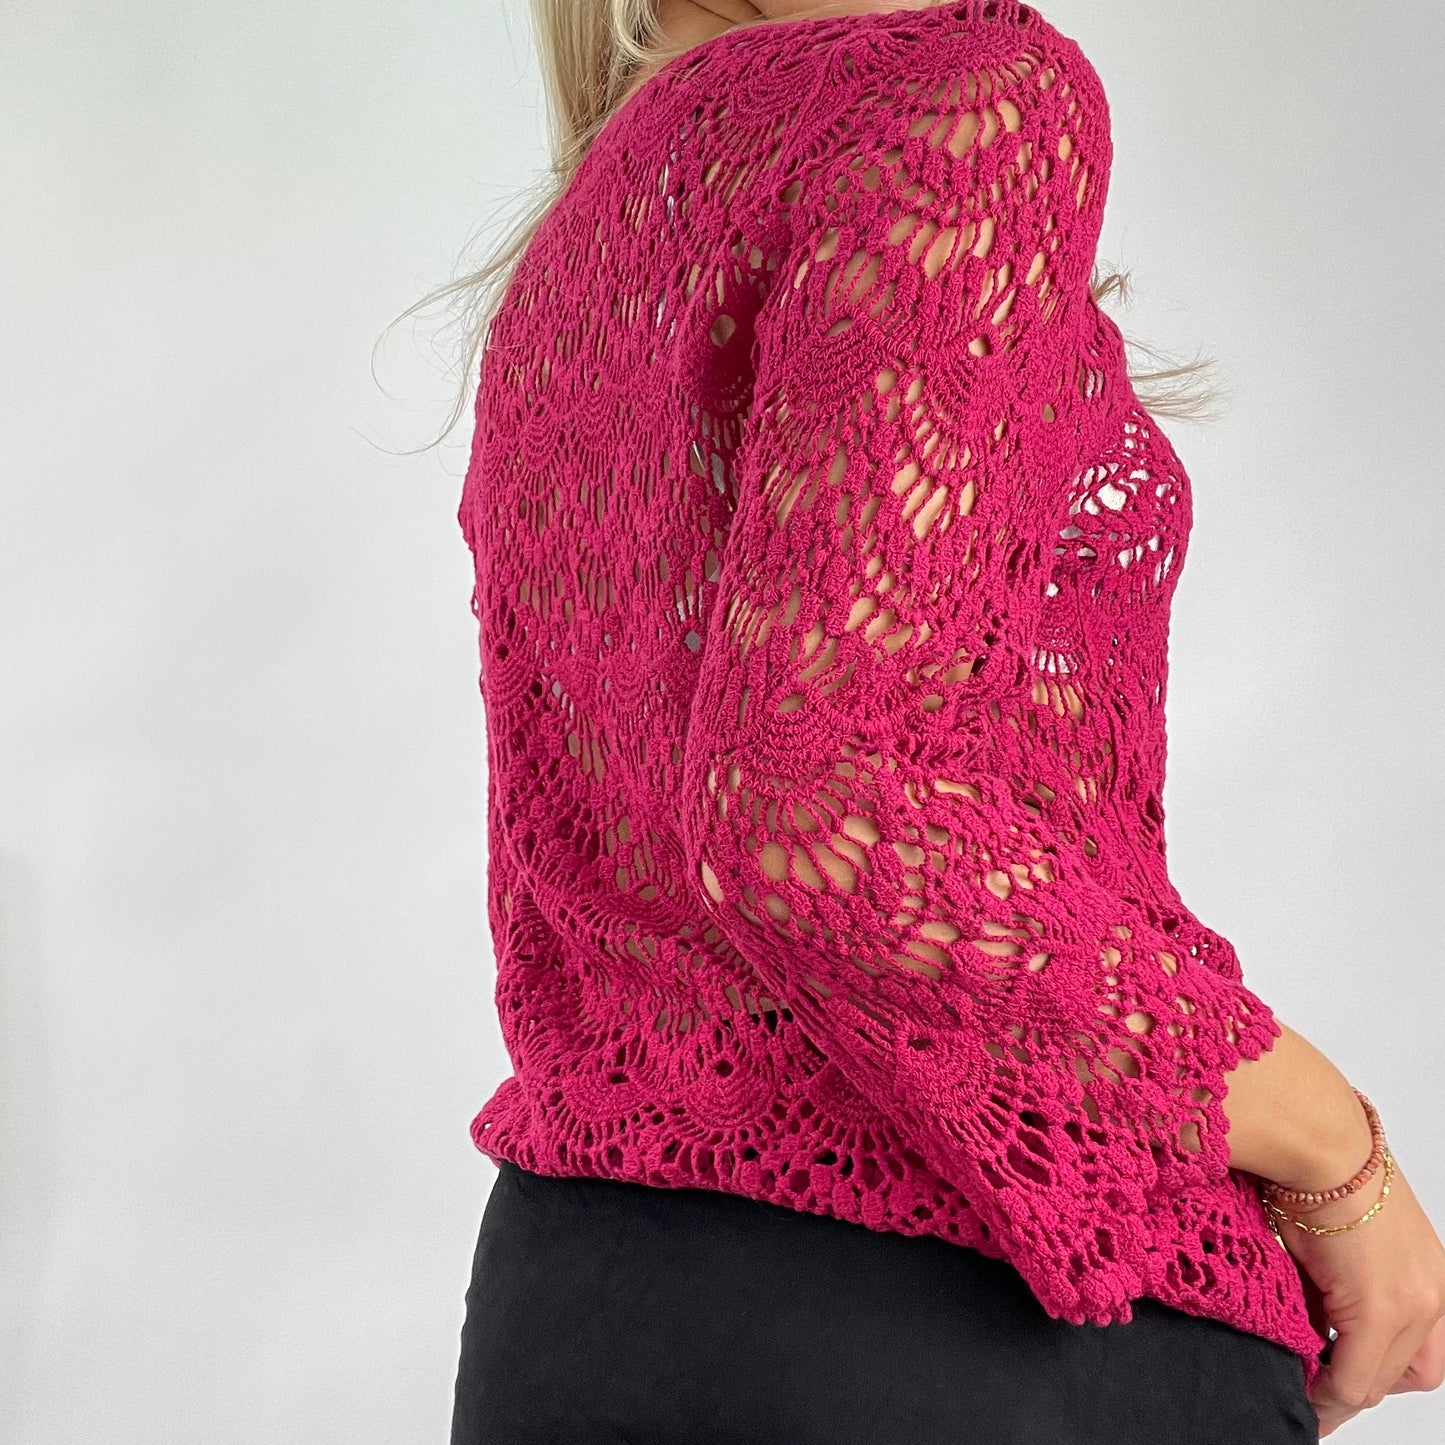 💻 MERMAID CORE DROP | small burgundy crochet top